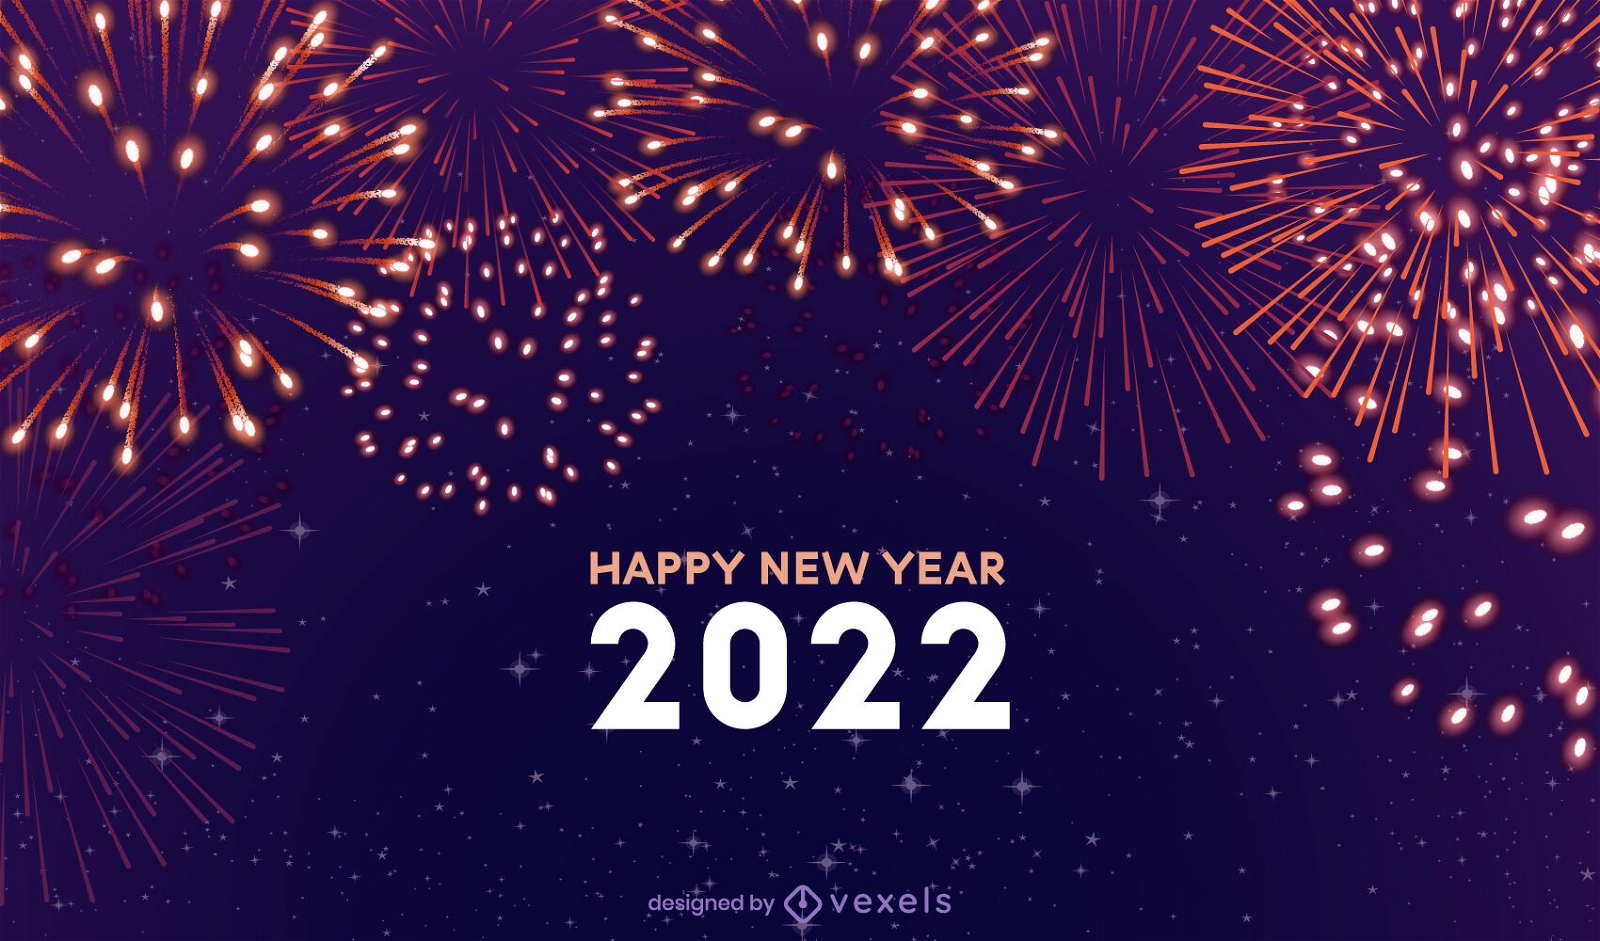 Happy New Year 2022 illustration design